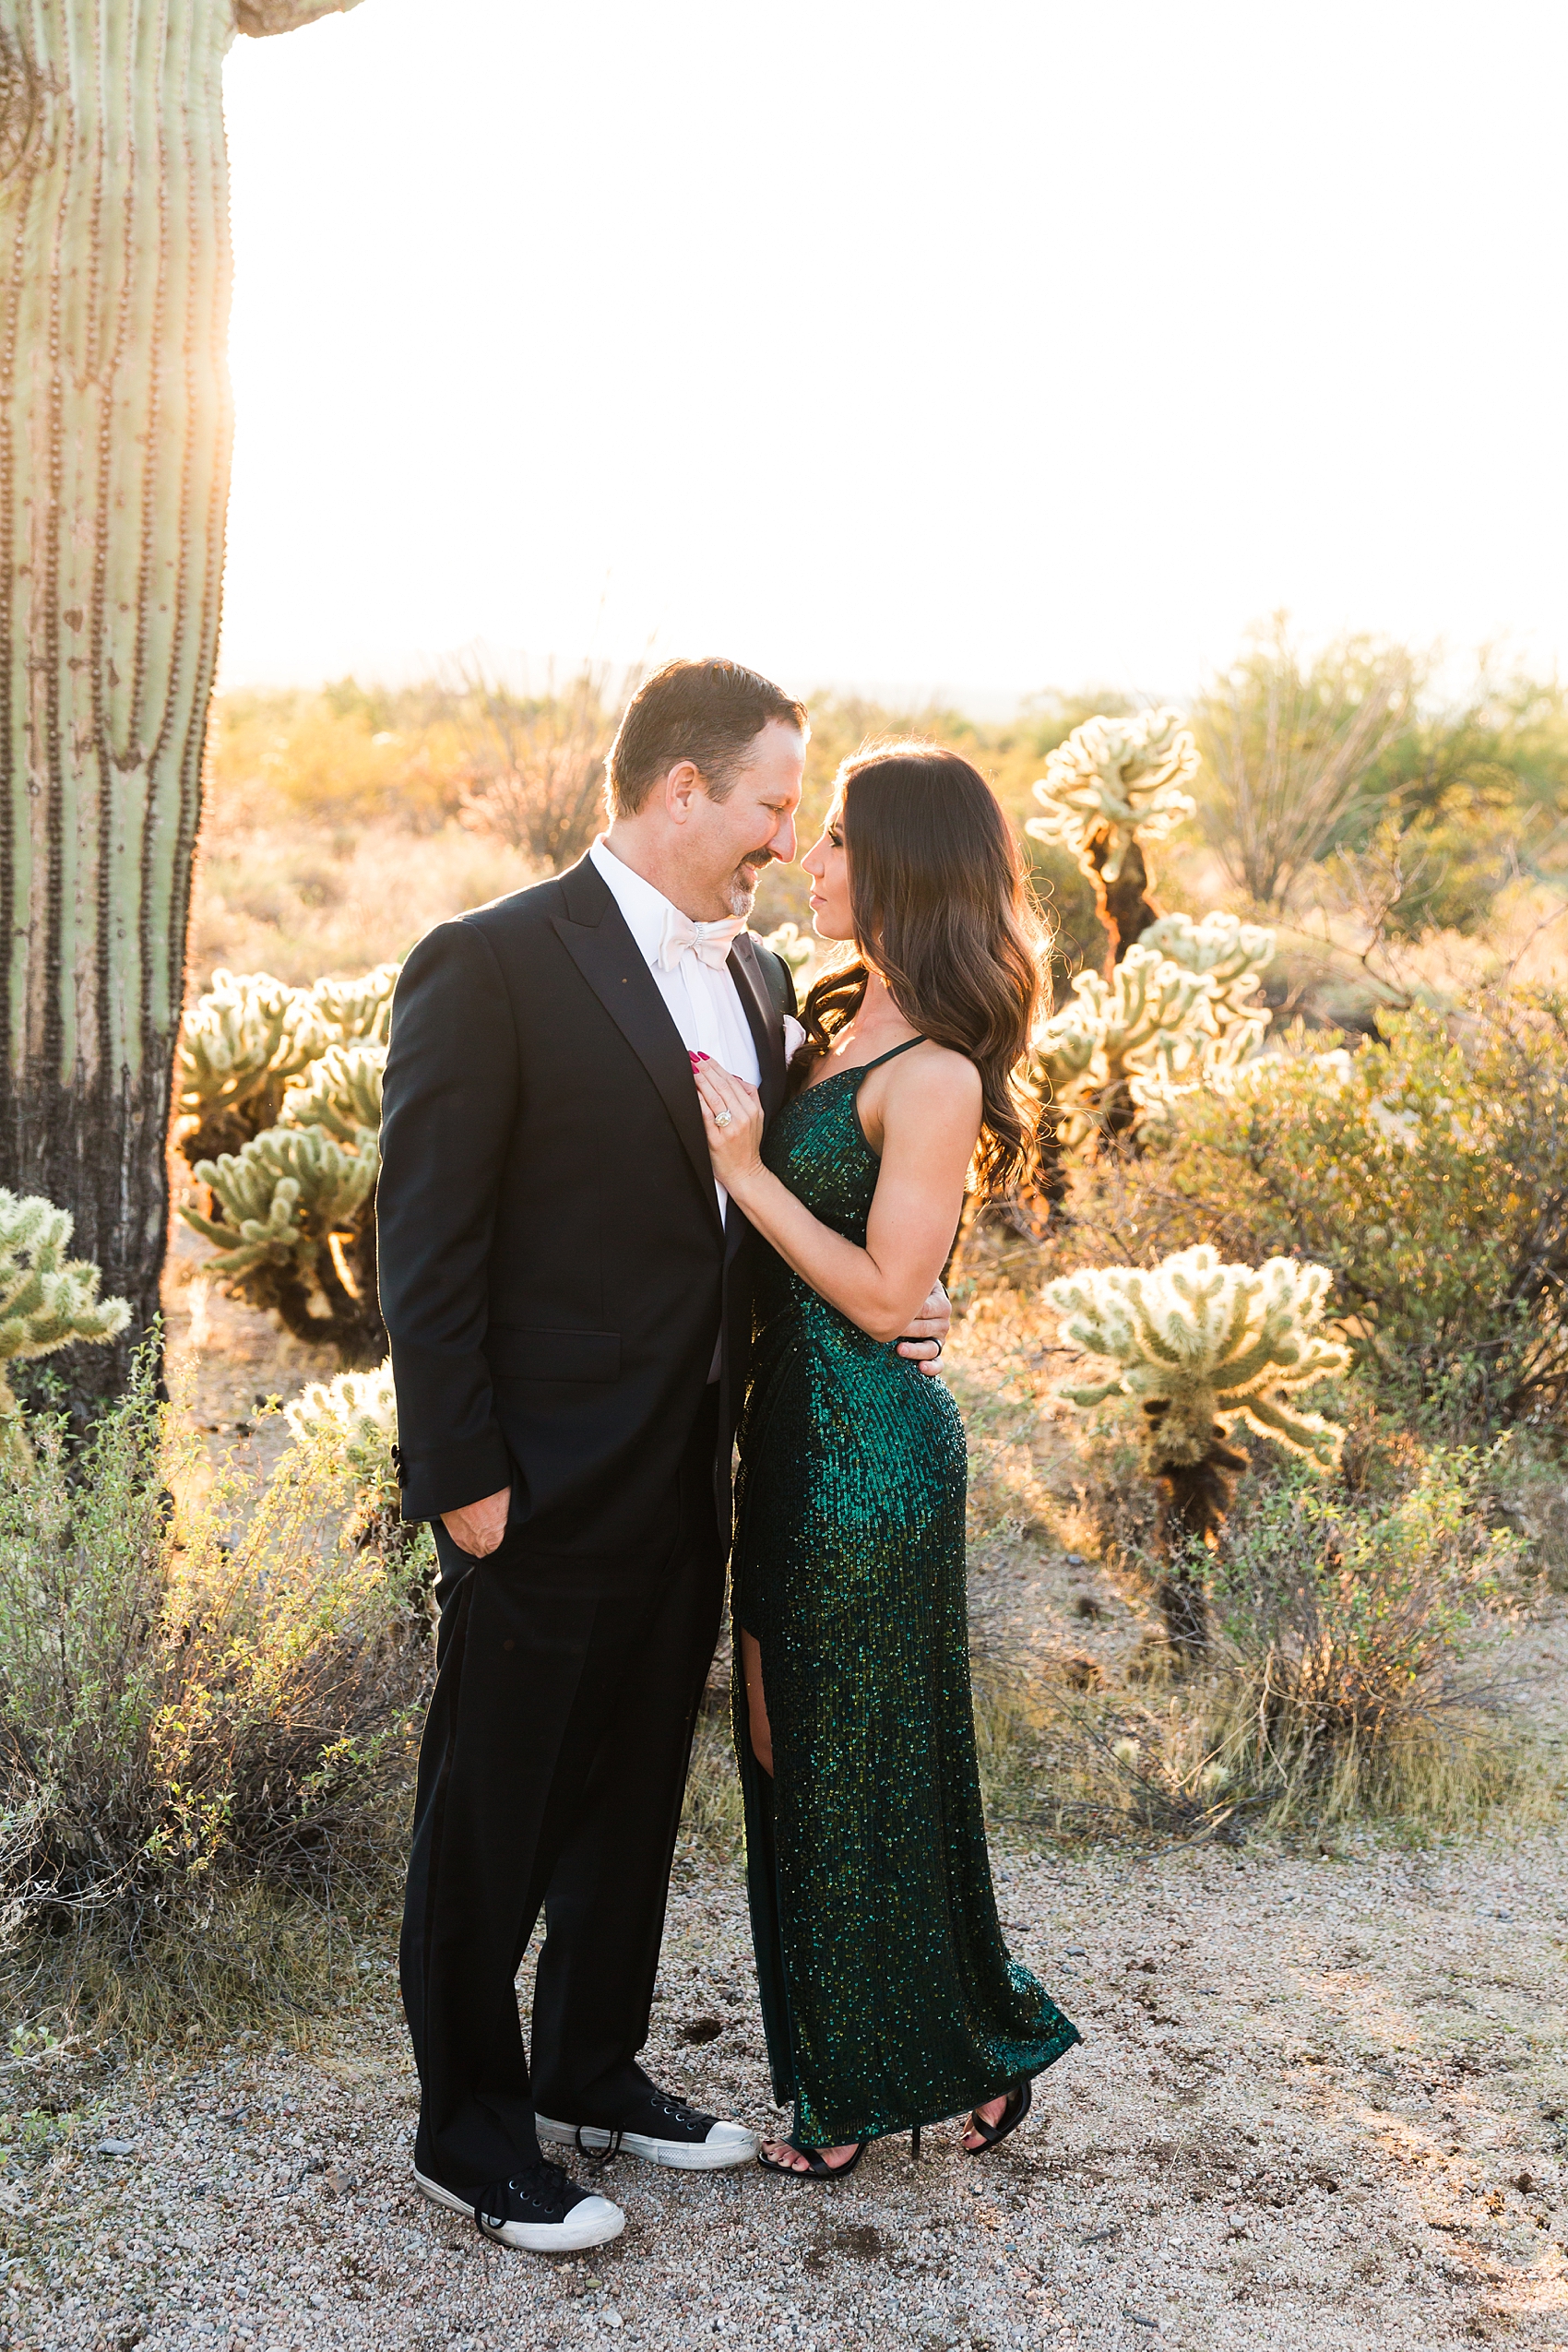 Leah Hope Photography | Scottsdale Phoenix Arizona | Desert Landscape Cactus Saguaro Scenery | Family Pictures | Elegant Glam Upscale Classy Family Photos | What to Wear | Family Poses